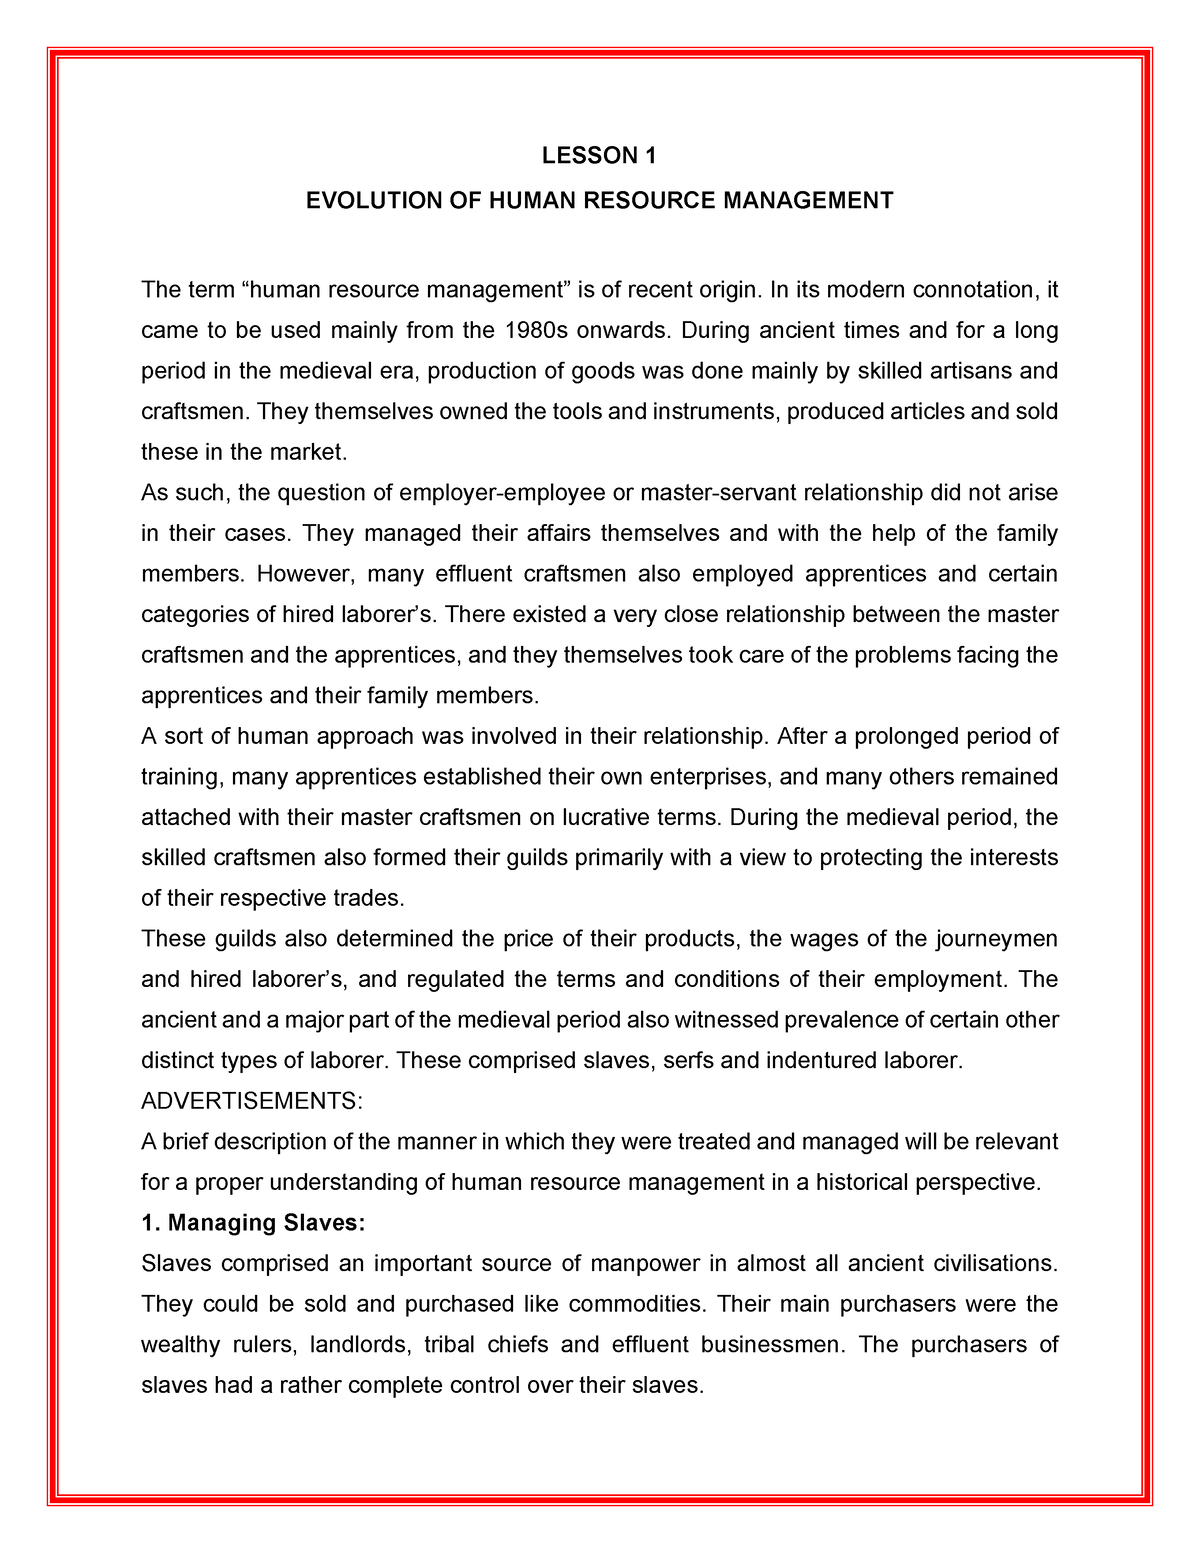 evolution of human resource management essay pdf